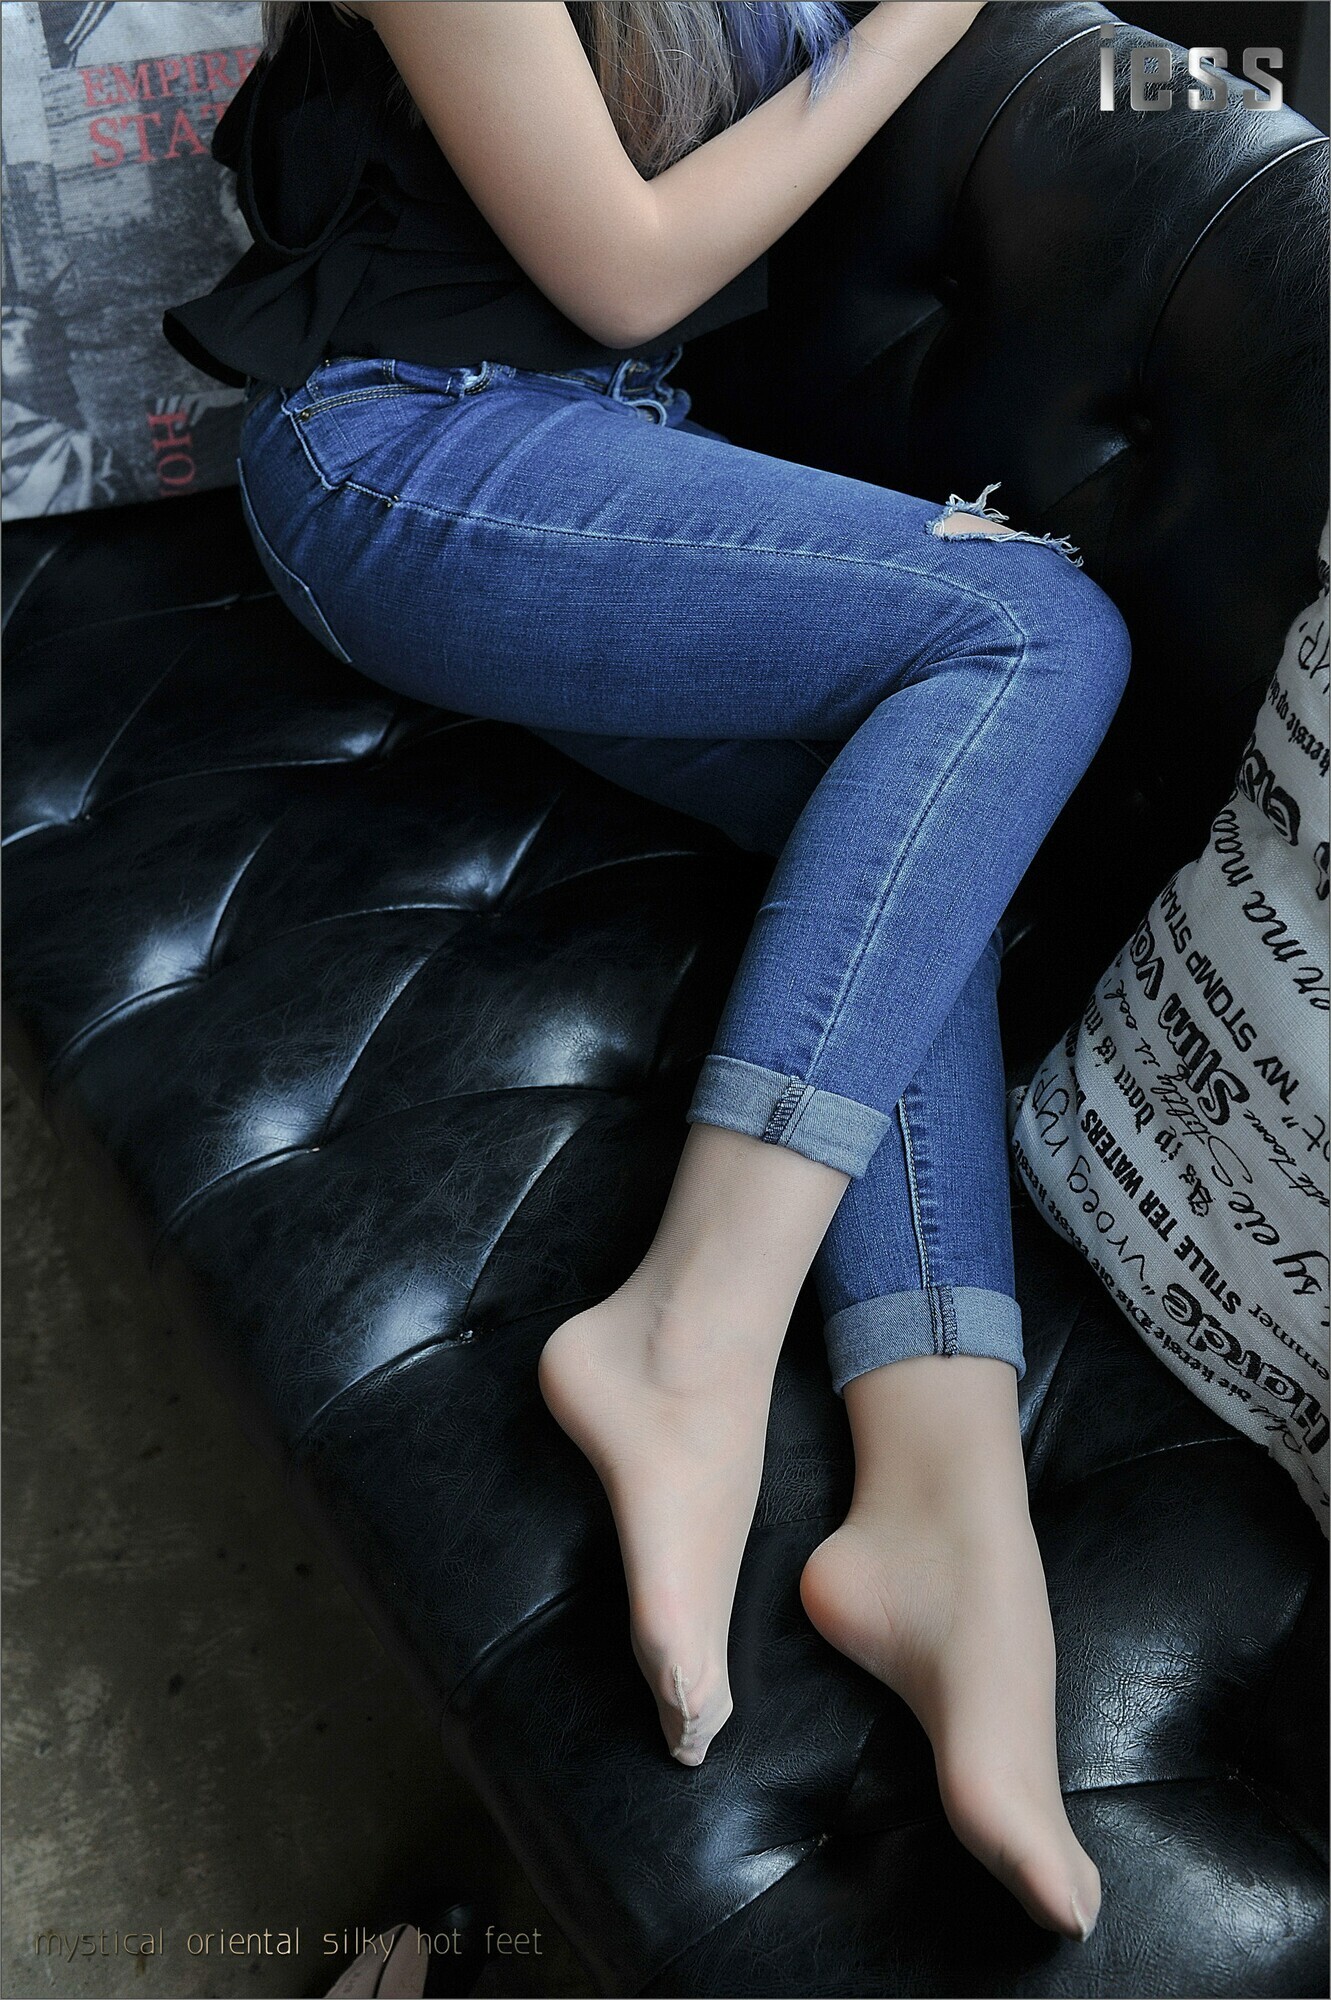 [IESS] Zhang Xinyue's silk feet, high heels and jeans